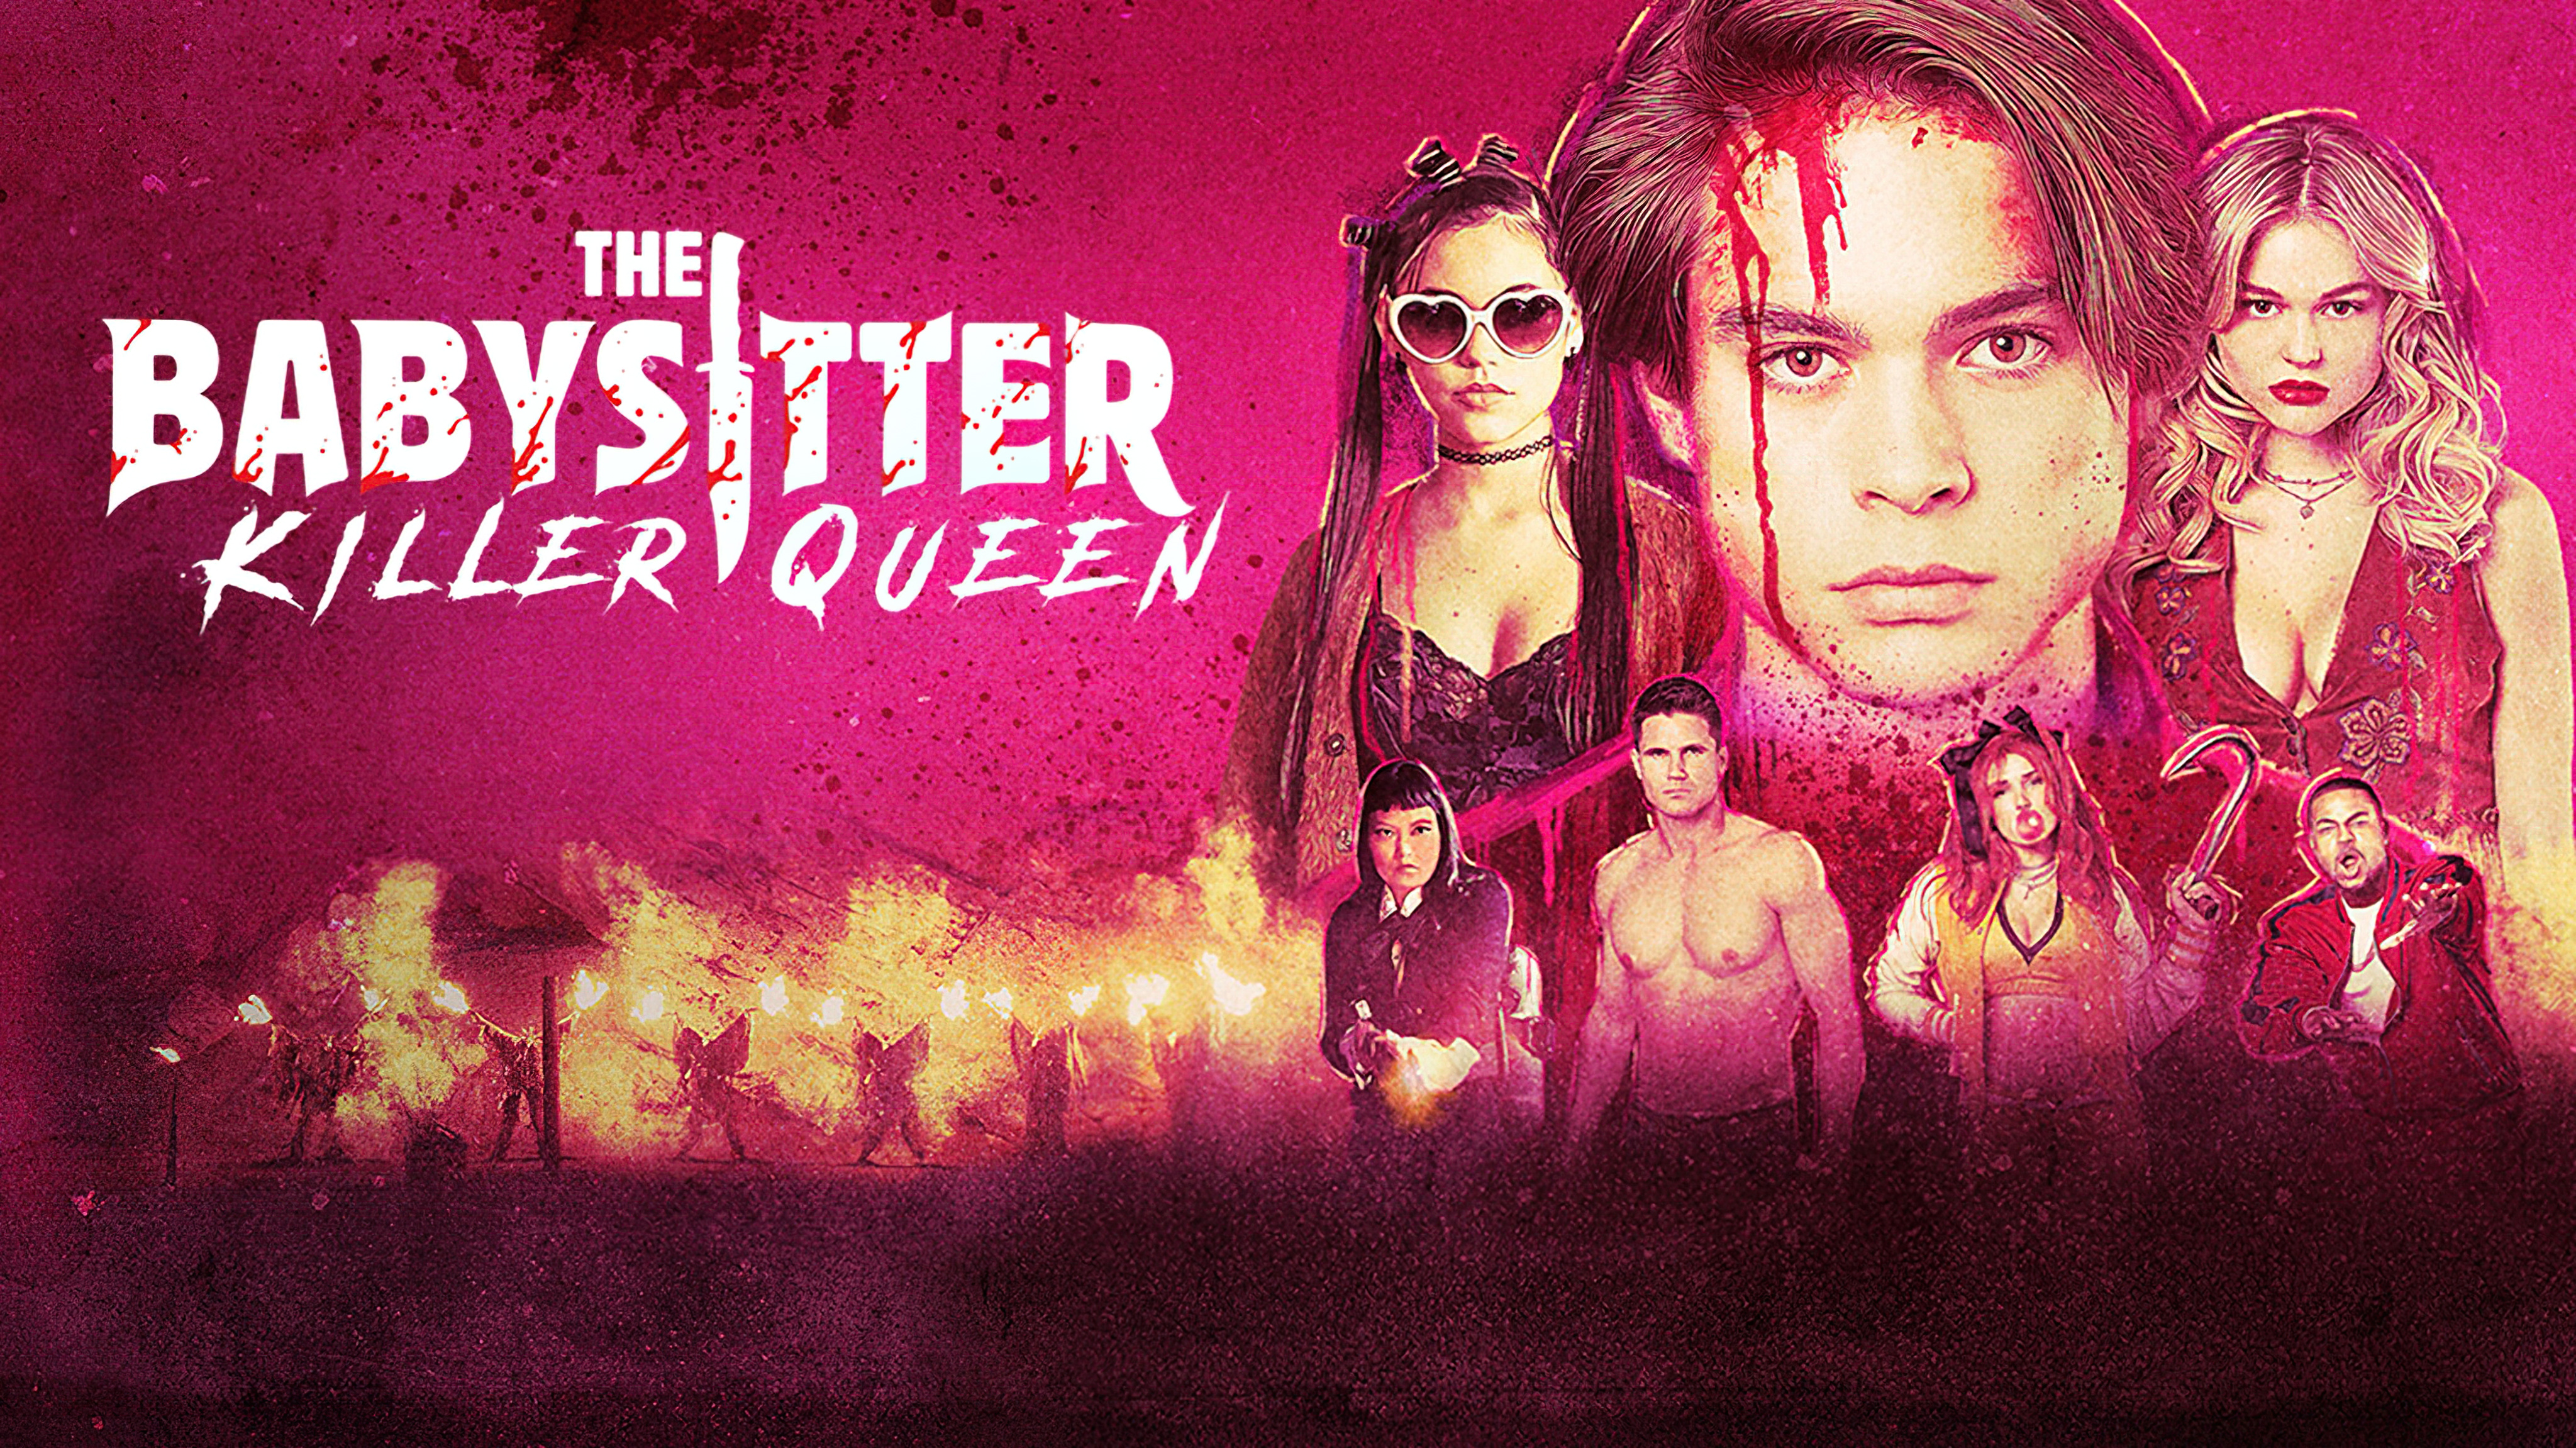 The Babysitter Killer Queen (2020) เดอะ เบบี้ซิตเตอร์ ฆาตกรตัวแม่.